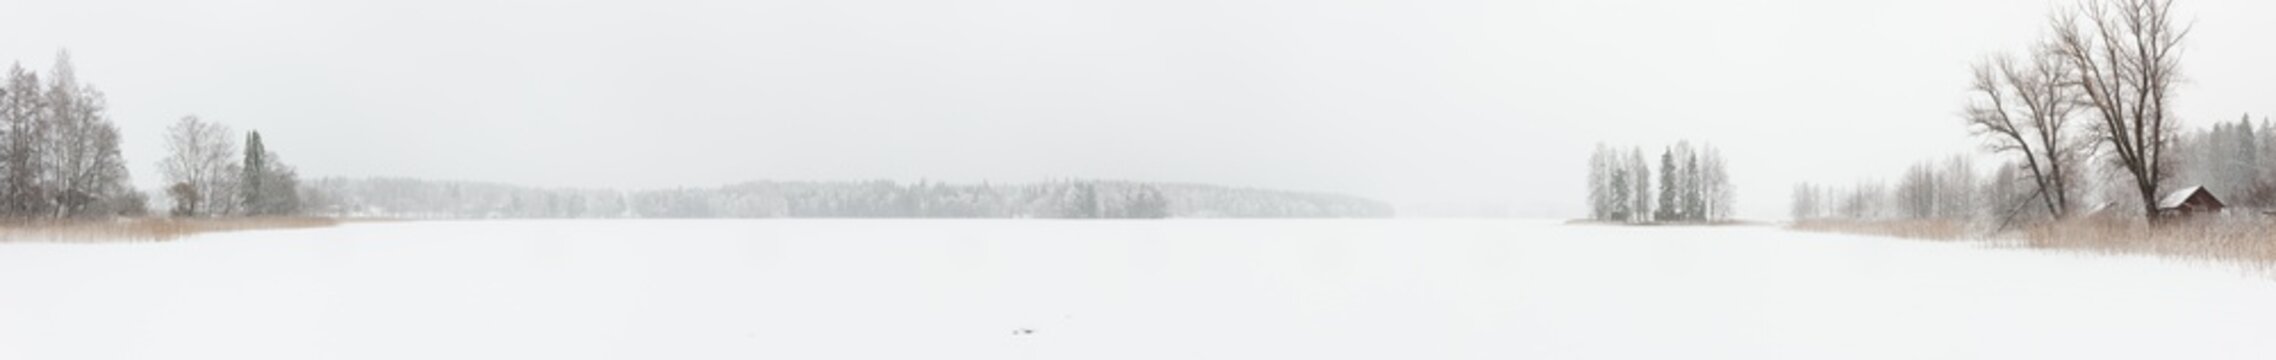 Blizzard winter landscape at frozen lake